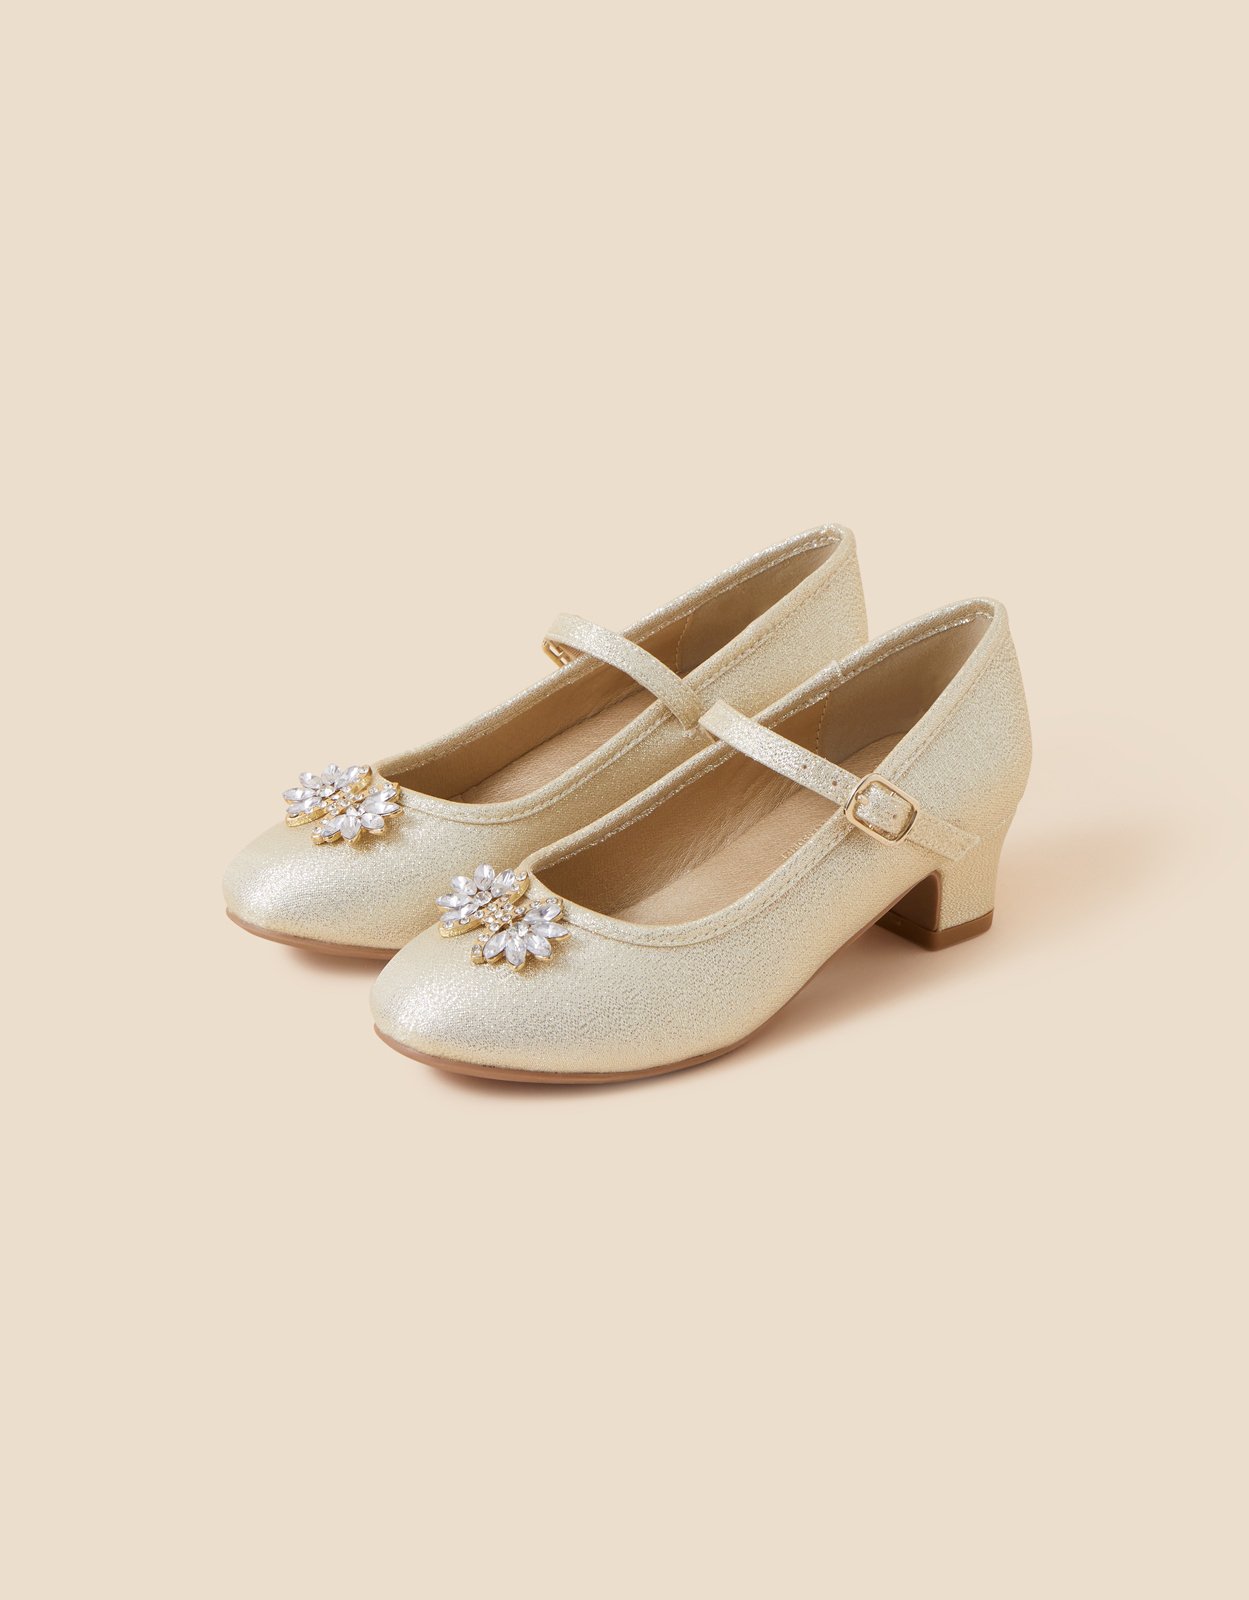 Accessorize Girl's Girls Shimmer Gem Flamenco Shoes Gold, Size: 3